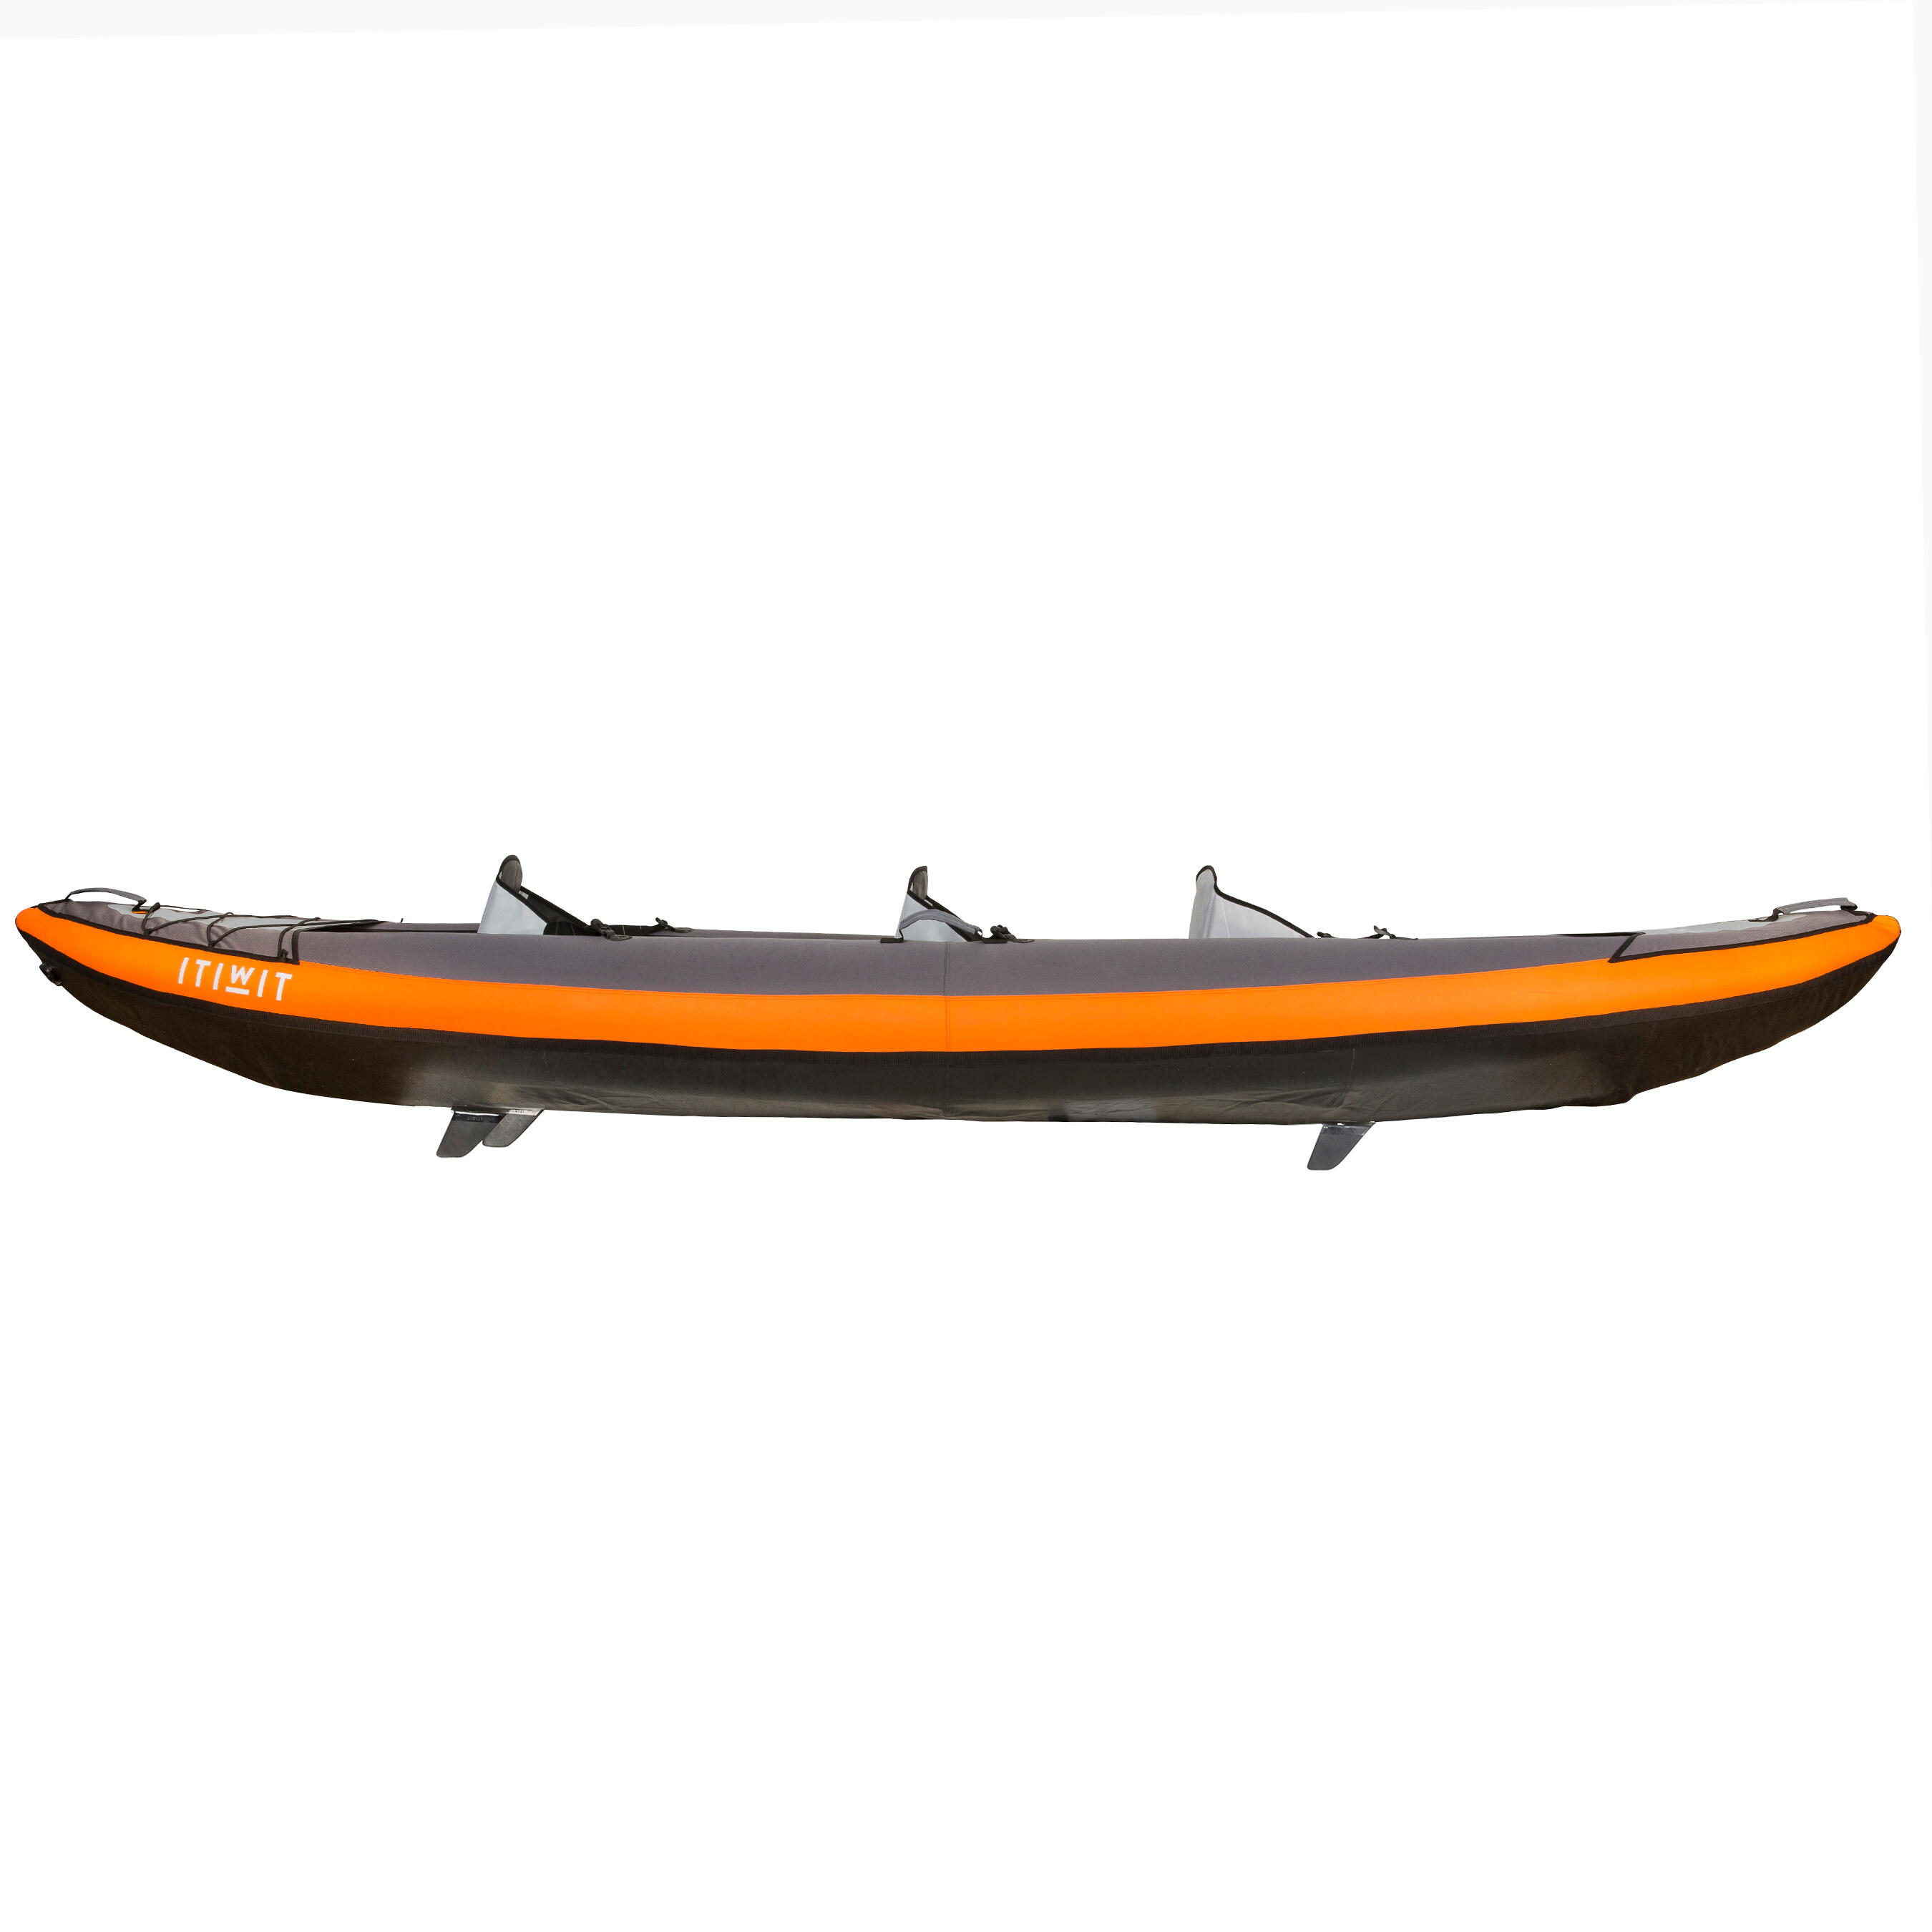 decathlon inflatable kayak